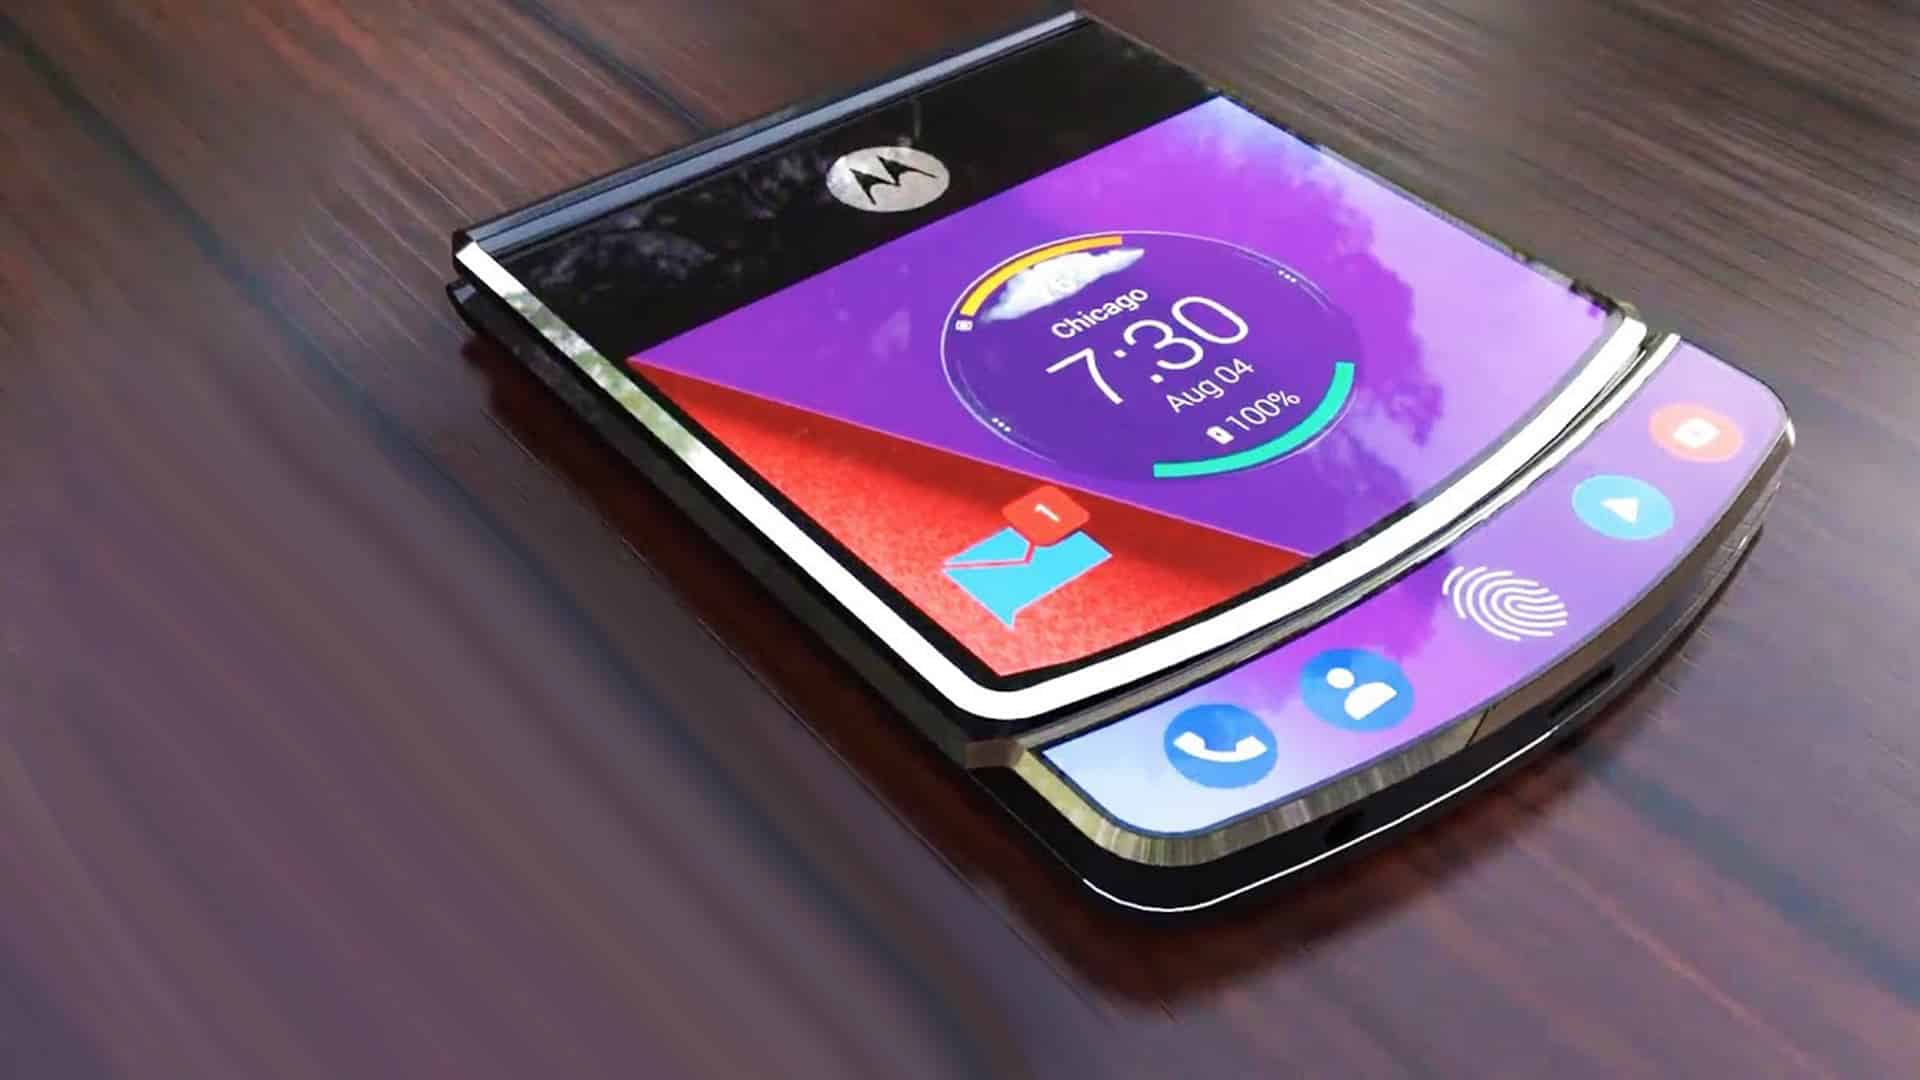 Le smartphone pliable de Motorola